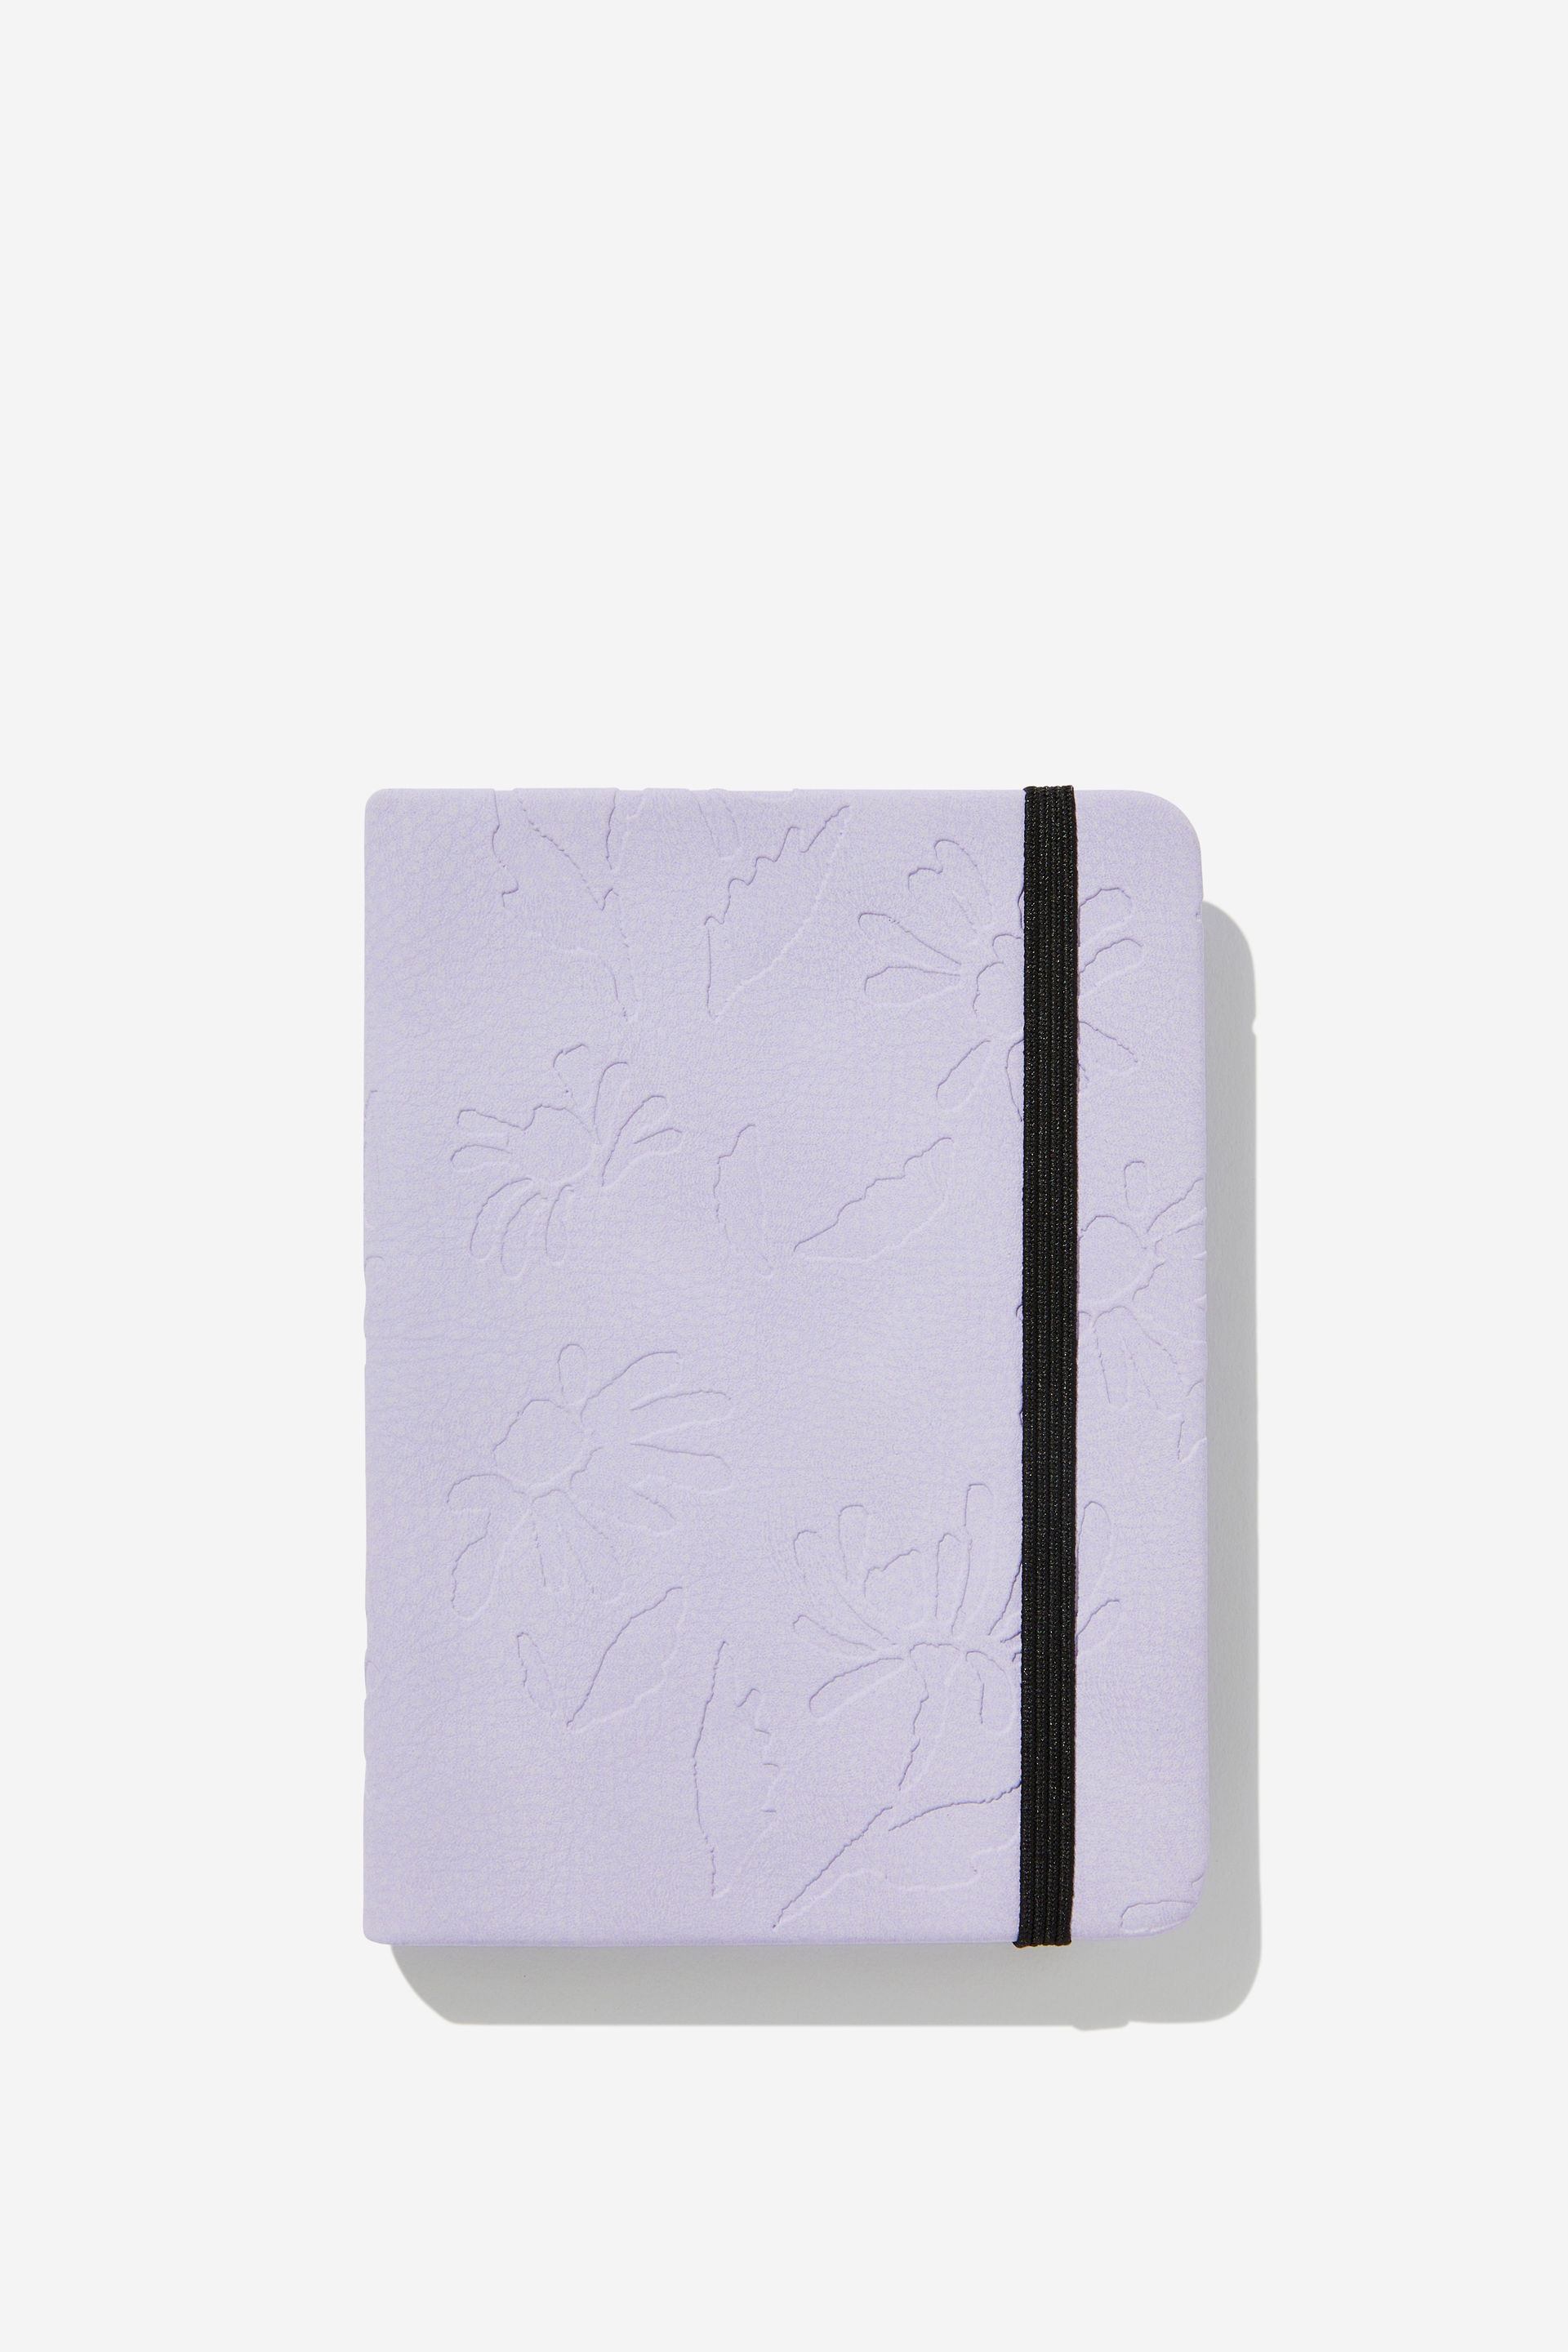 Typo - A6 Premium Buffalo Journal - Daisy soft lilac debossed